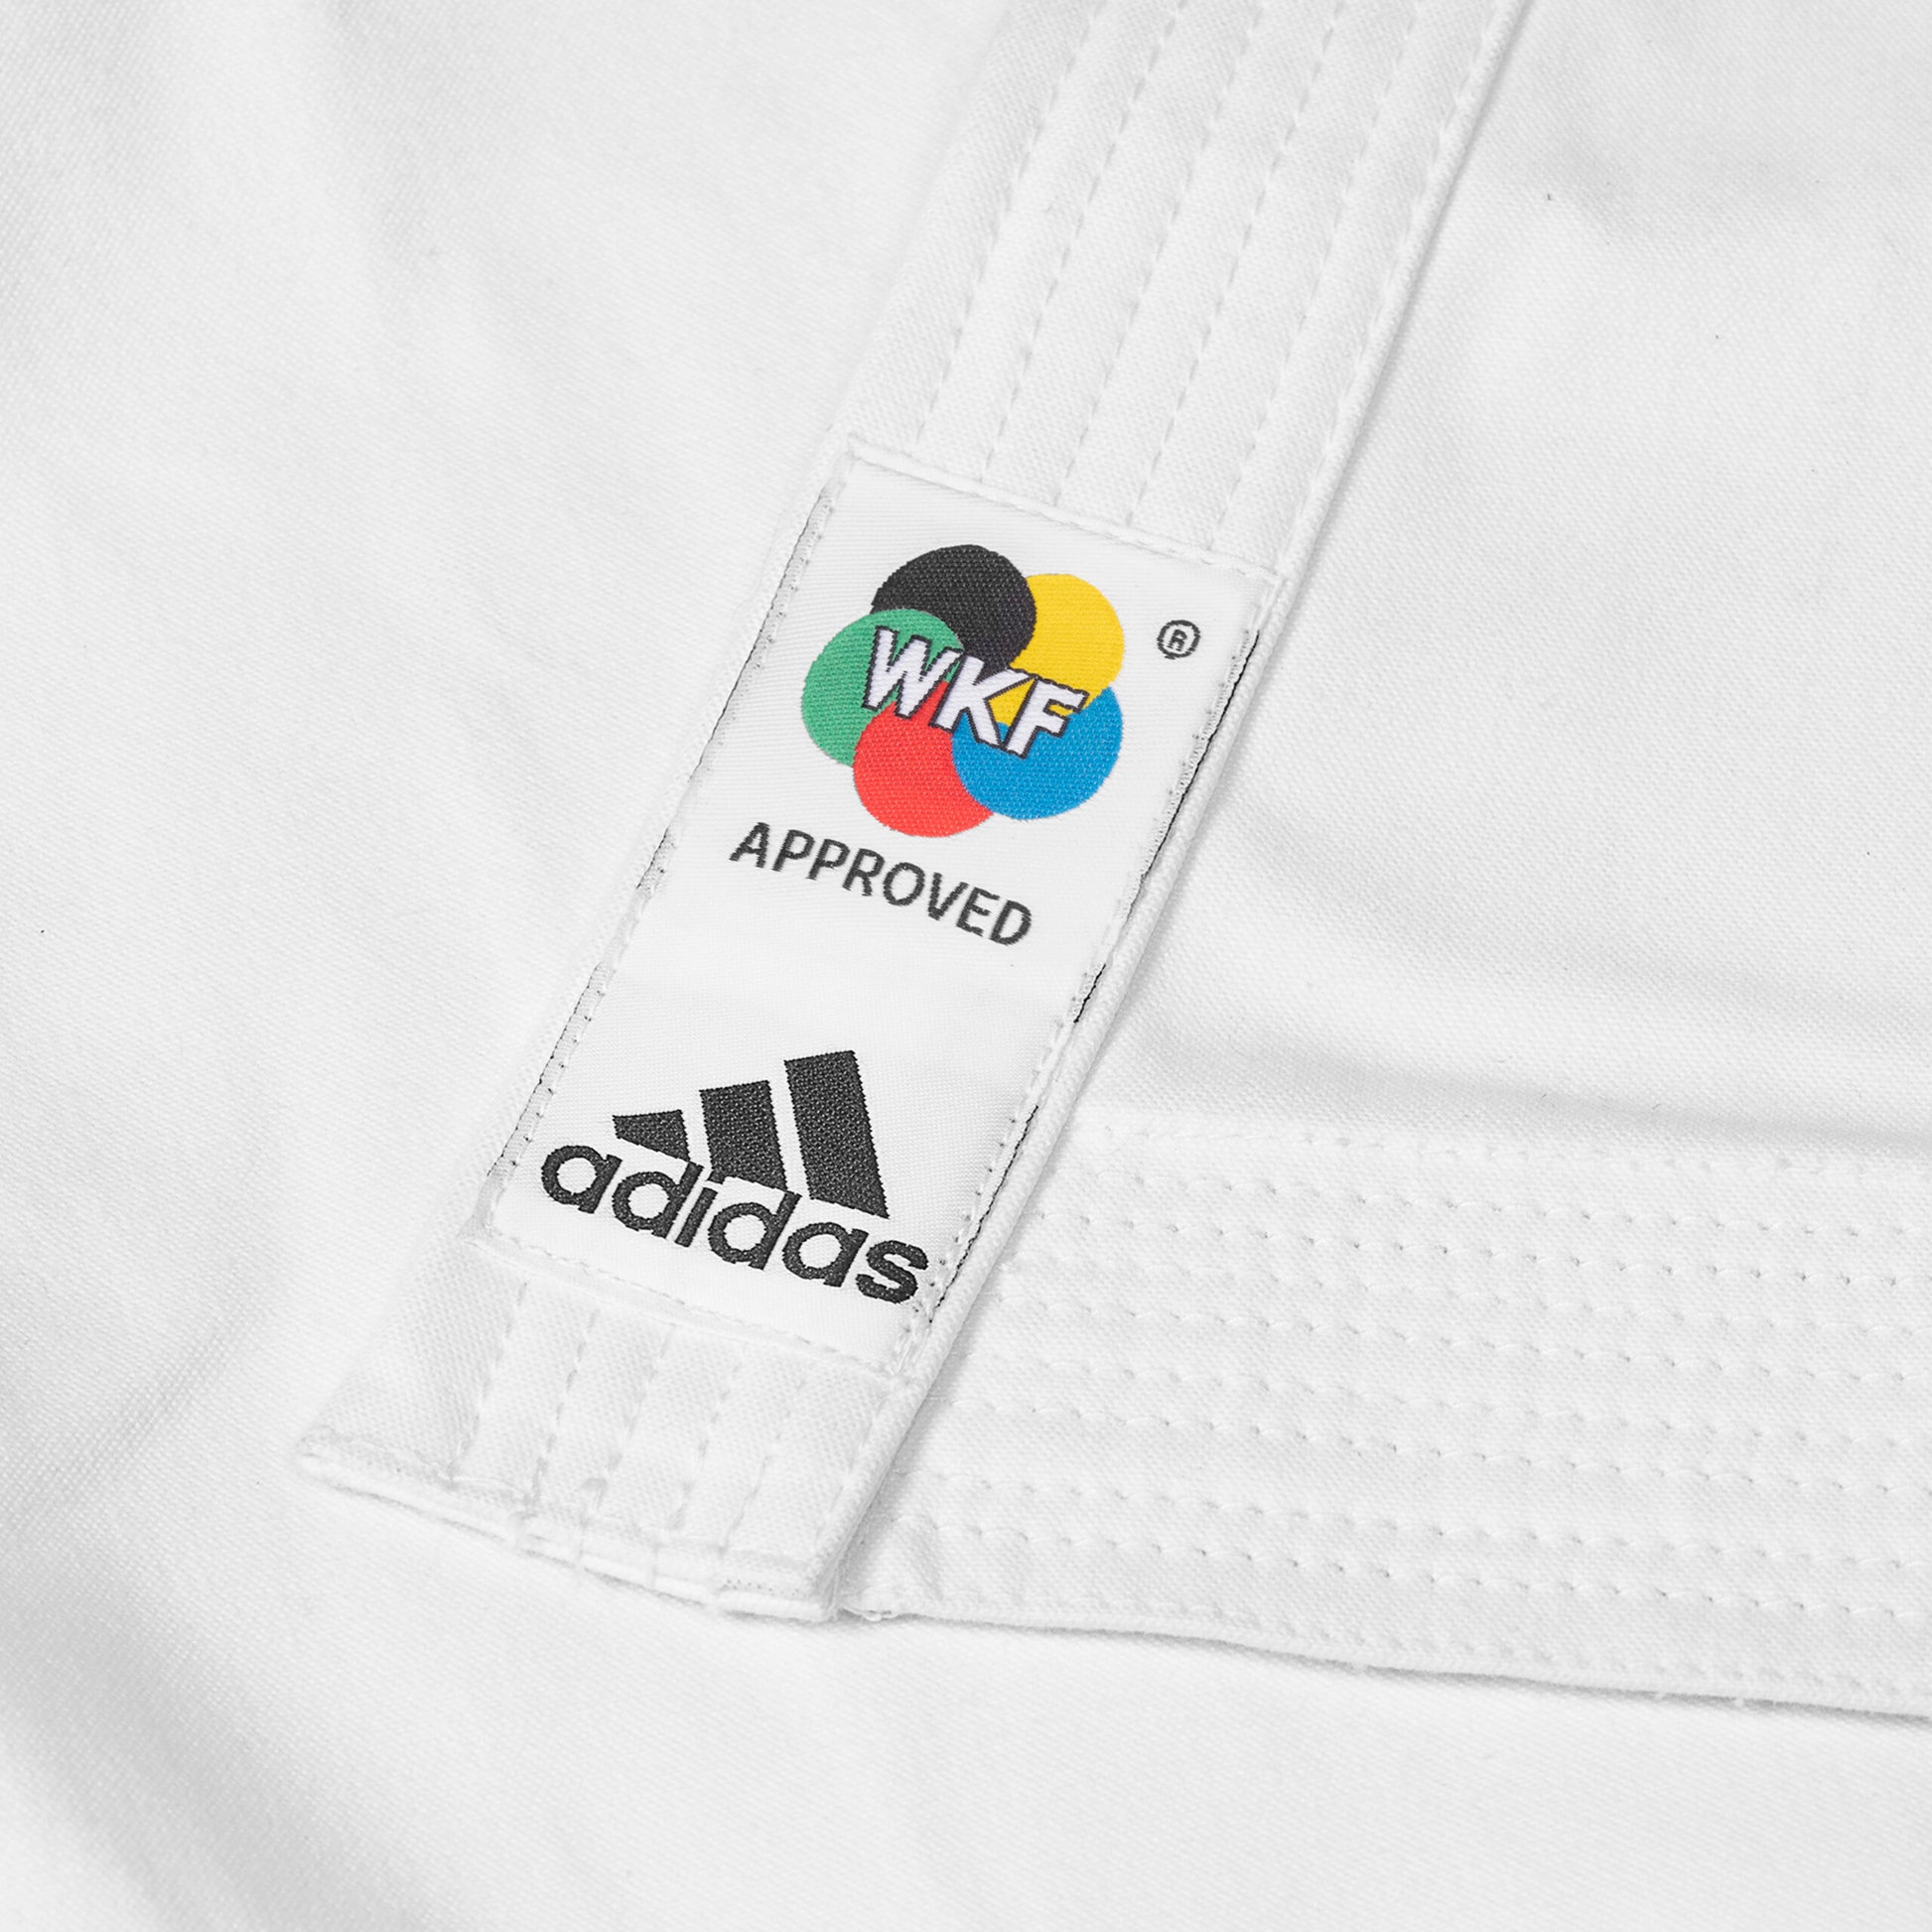 K999 Adidas Shori Kata Karate Gi Uniform White Wkf Approved 03